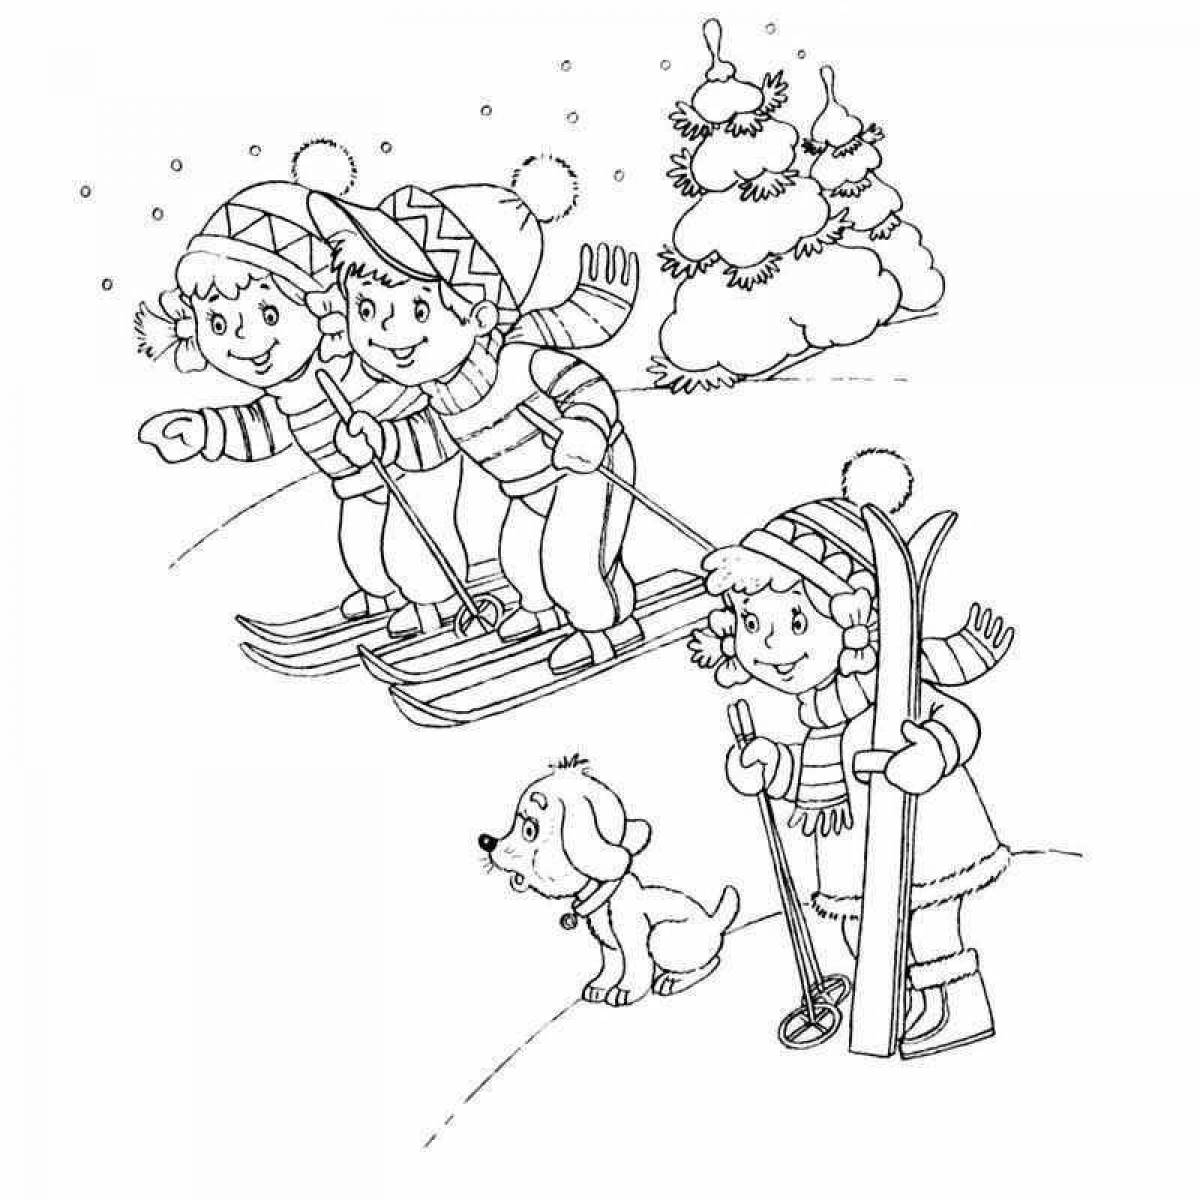 Shiny Winter Fun coloring page